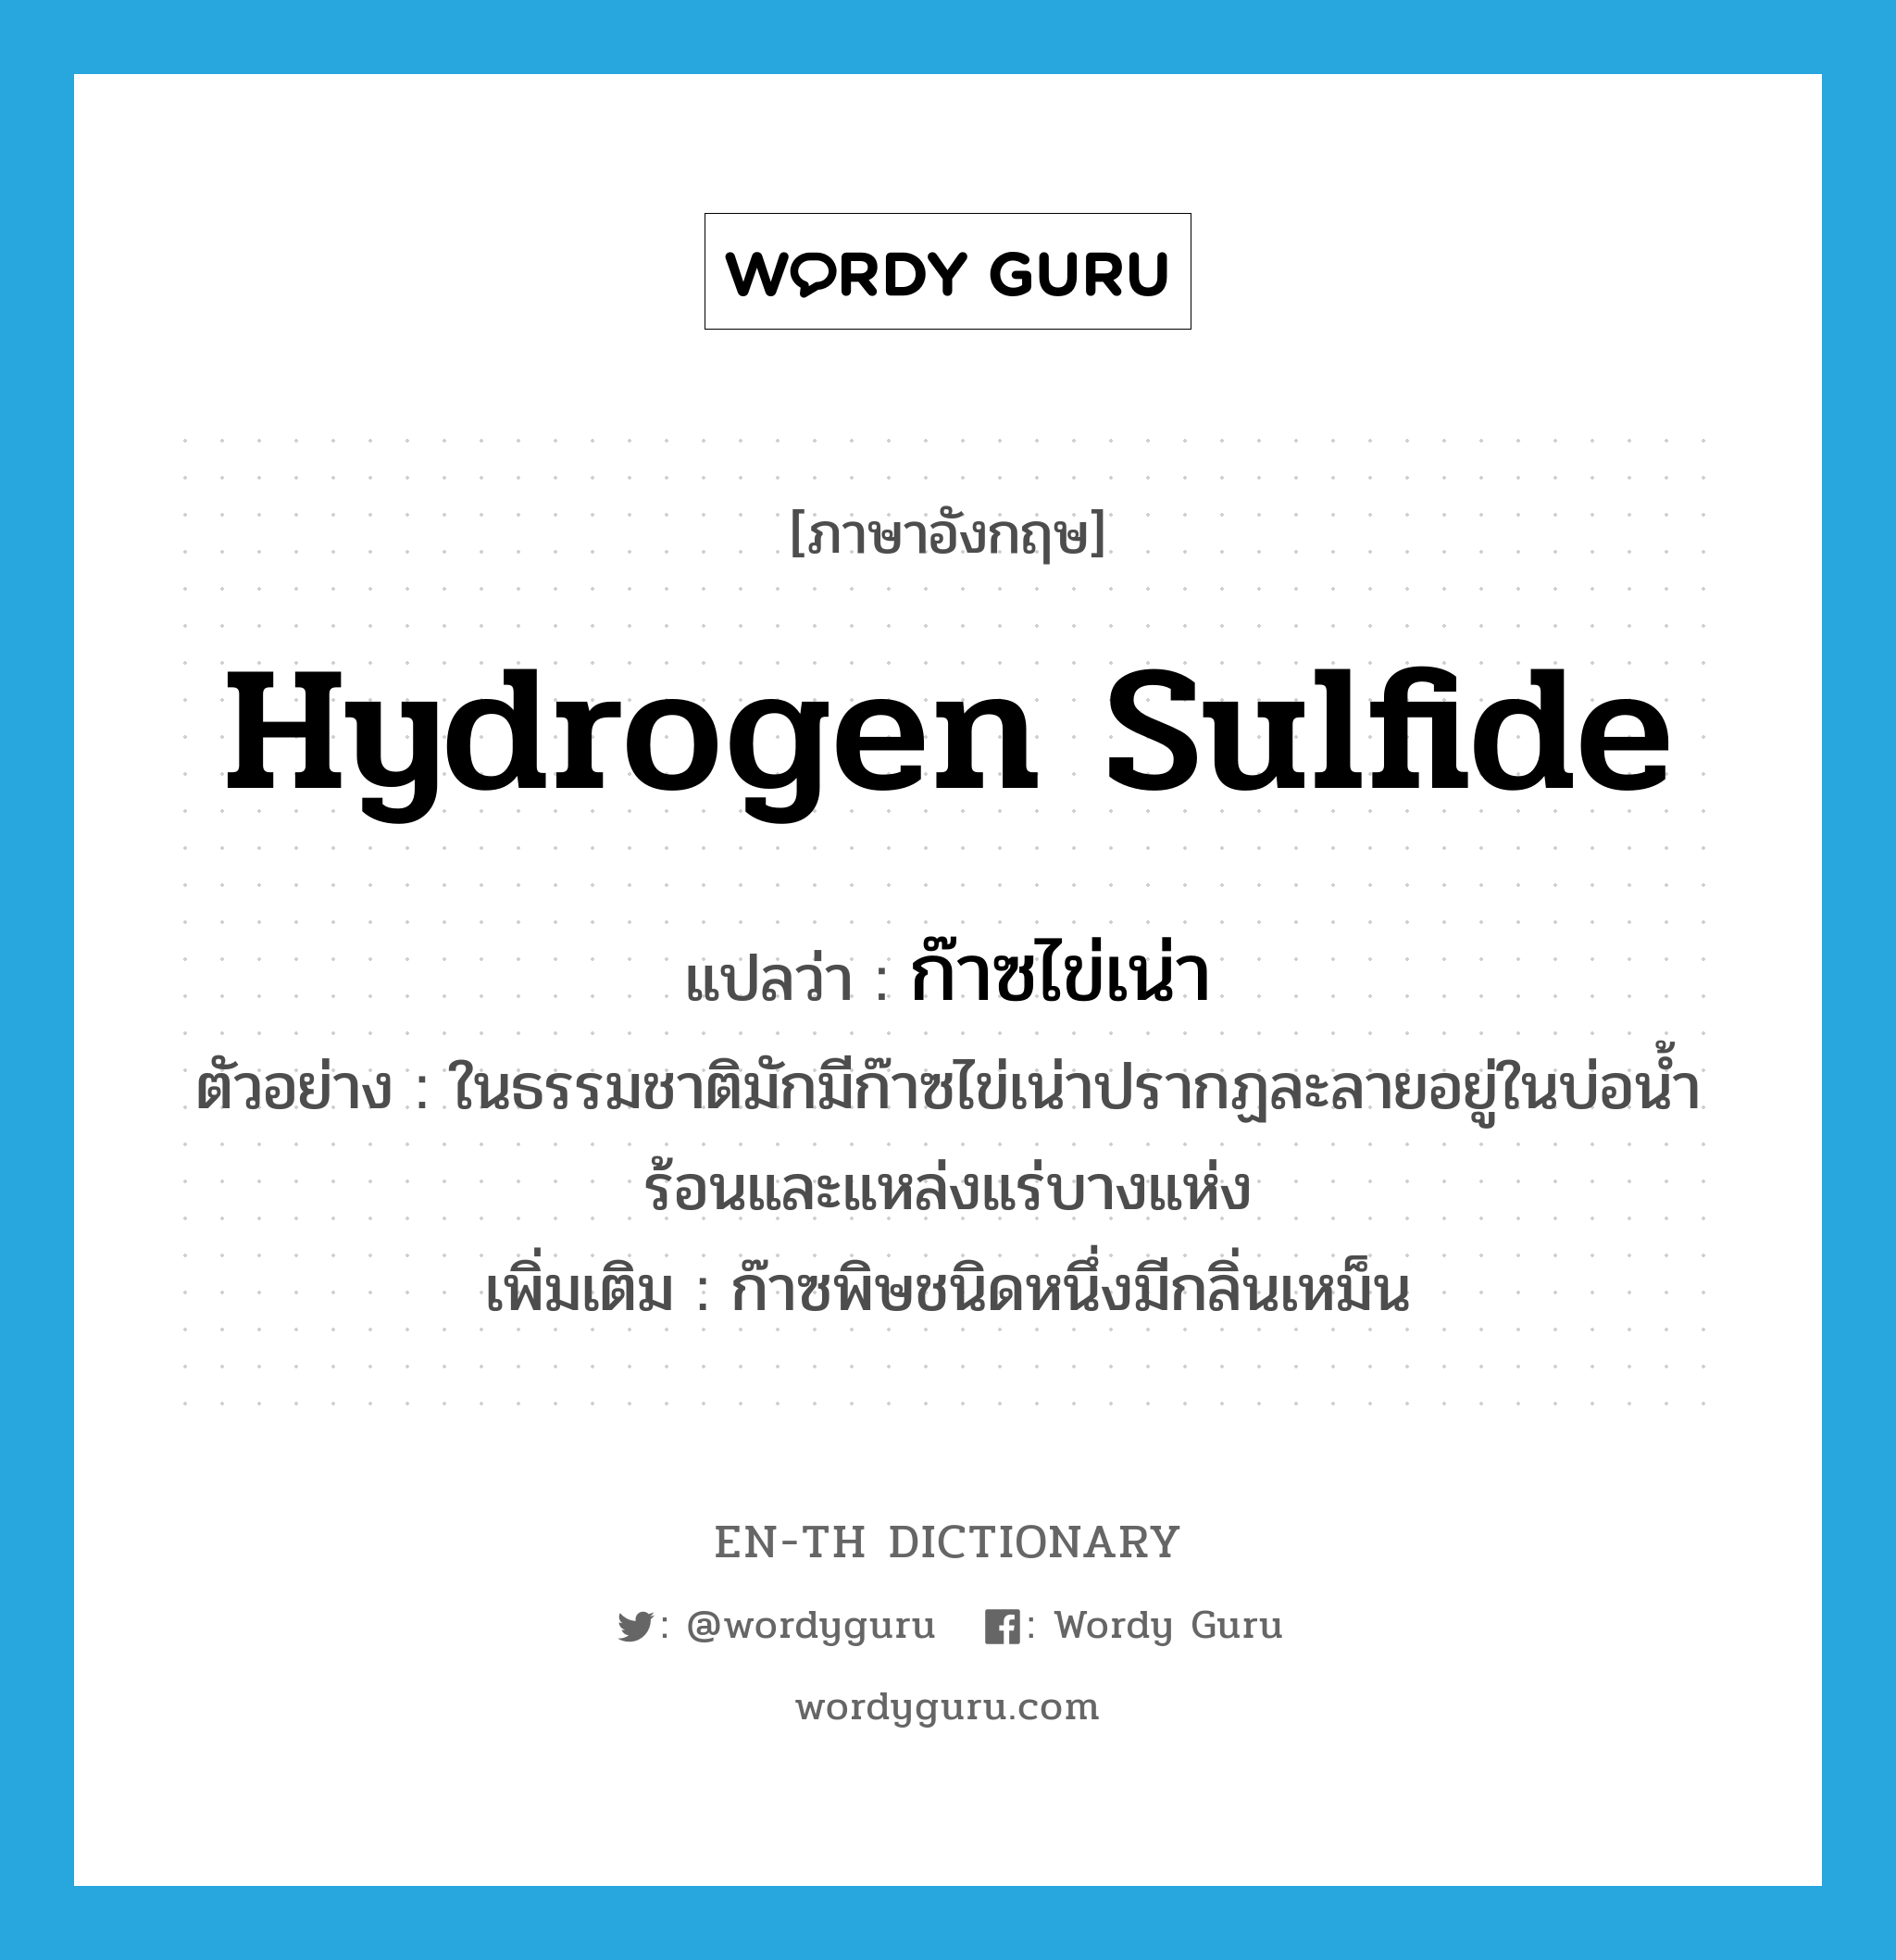 hydrogen sulfide แปลว่า?, คำศัพท์ภาษาอังกฤษ hydrogen sulfide แปลว่า ก๊าซไข่เน่า ประเภท N ตัวอย่าง ในธรรมชาติมักมีก๊าซไข่เน่าปรากฏละลายอยู่ในบ่อน้ำร้อนและแหล่งแร่บางแห่ง เพิ่มเติม ก๊าซพิษชนิดหนึ่งมีกลิ่นเหม็น หมวด N